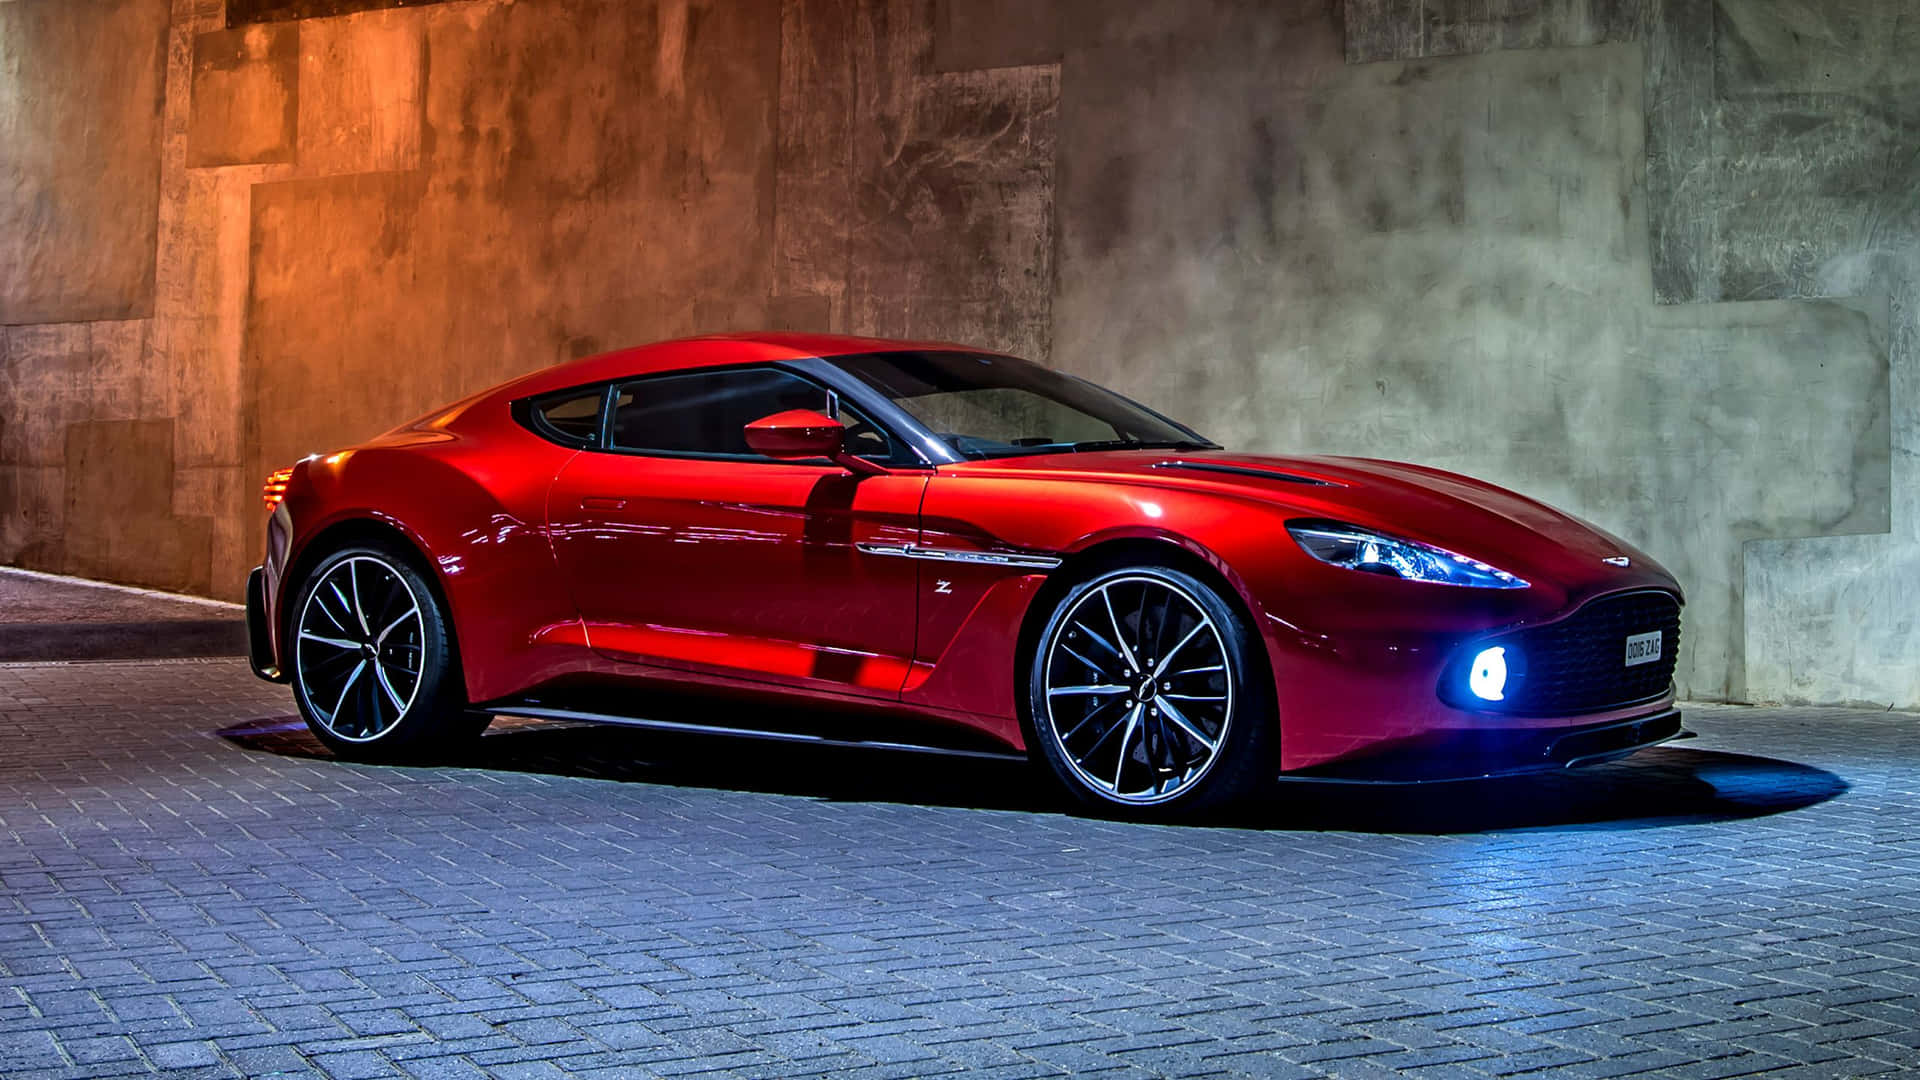 Stunning Aston Martin Vanquish in Vibrant Red Wallpaper